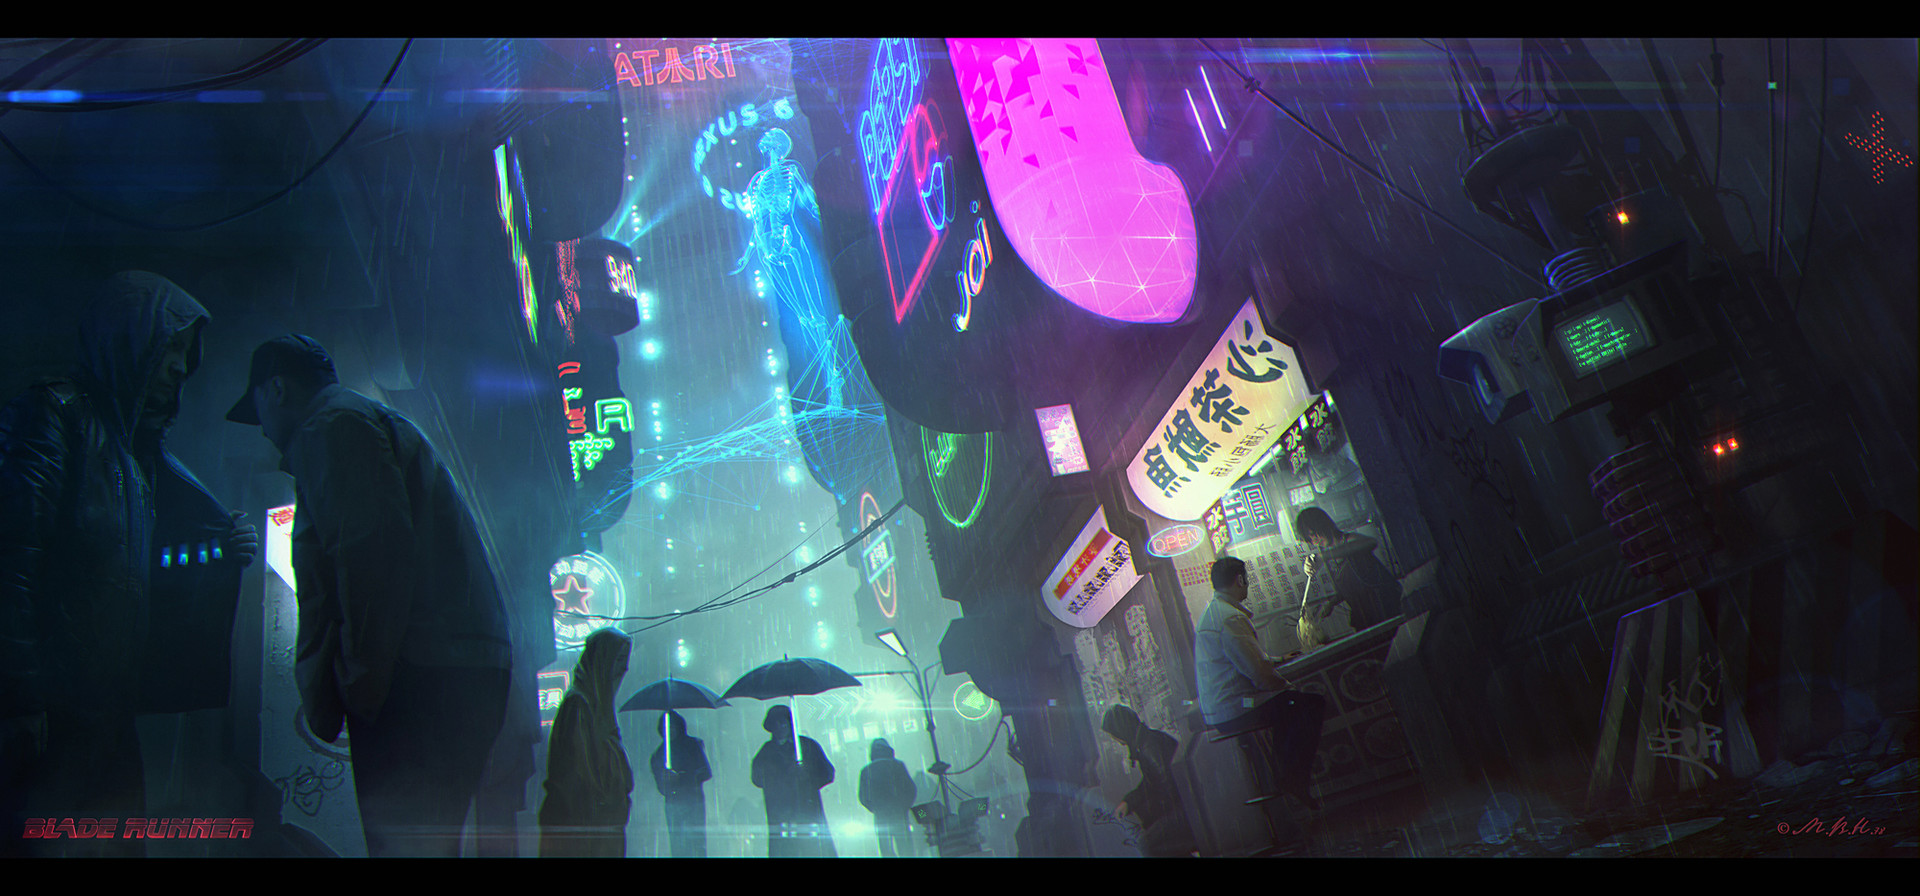 General 1920x896 cyberpunk science fiction digital art Blade Runner futuristic futuristic city urban watermarked artwork